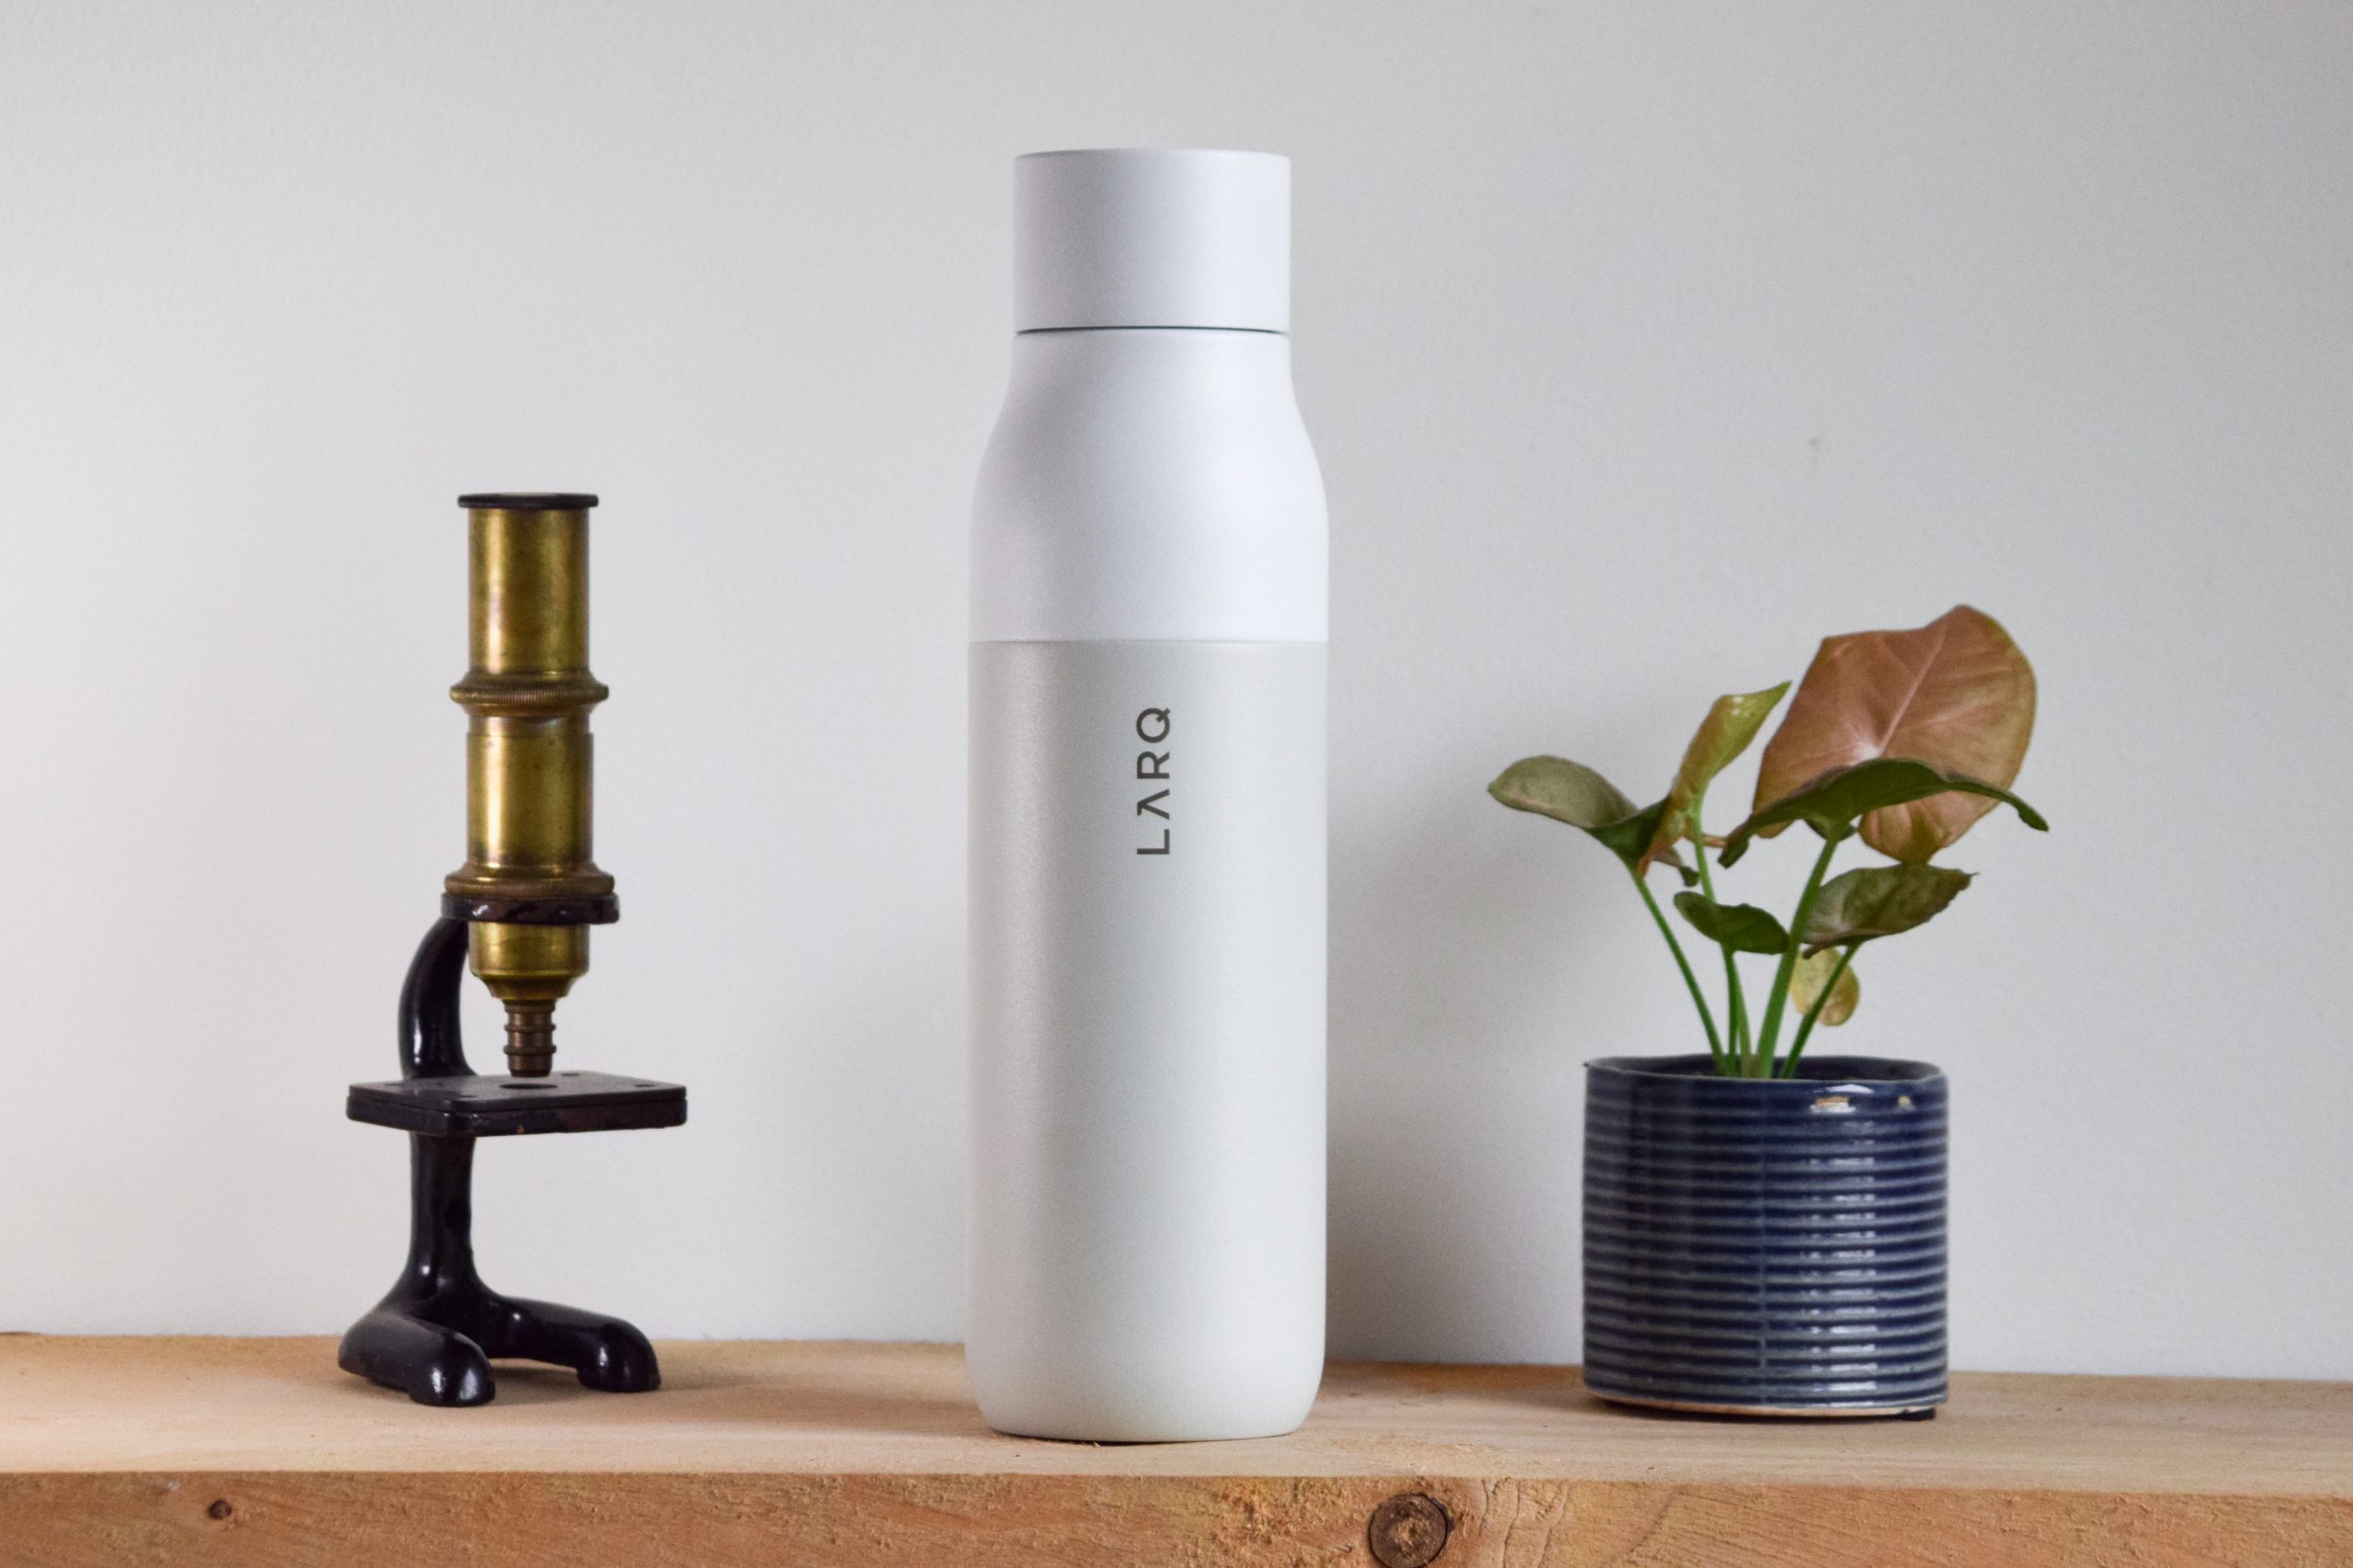 Plaske lokal rygte Product review: LARQ's World's First Self-cleaning Water Bottle -  Kristelvdakker